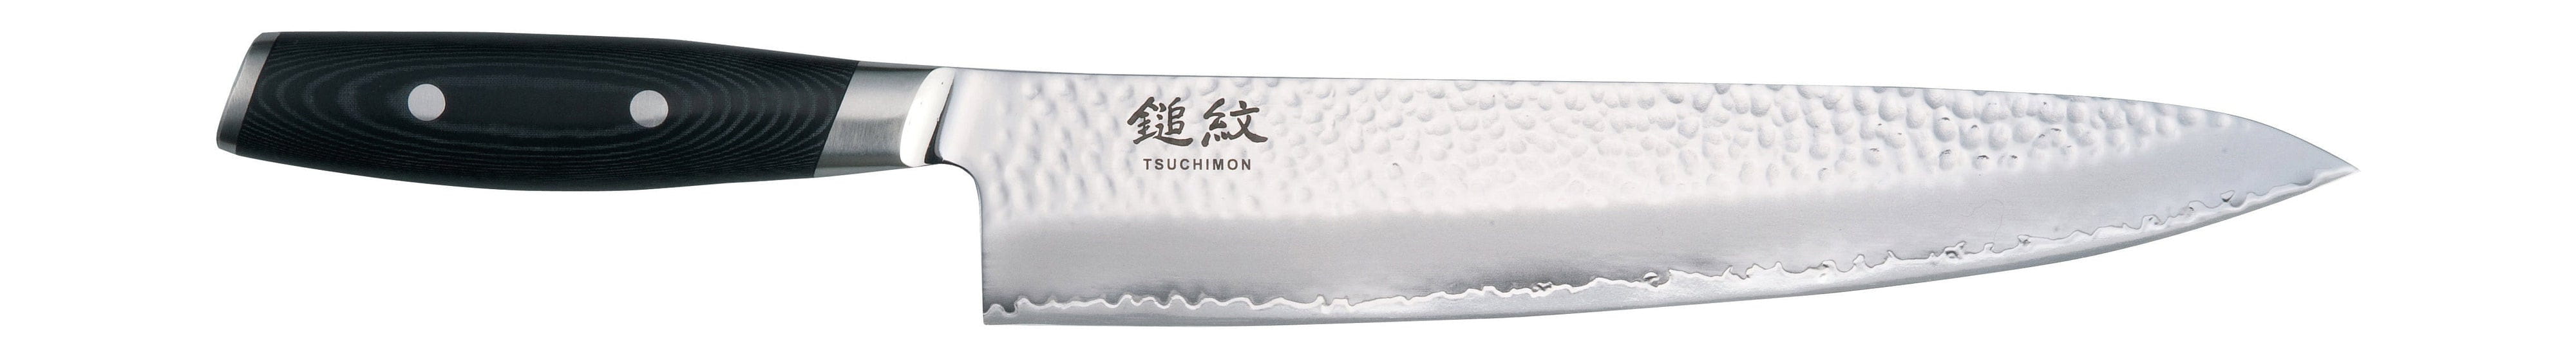 Yaxell Tsuchimon kokkur hníf, 25,5 cm